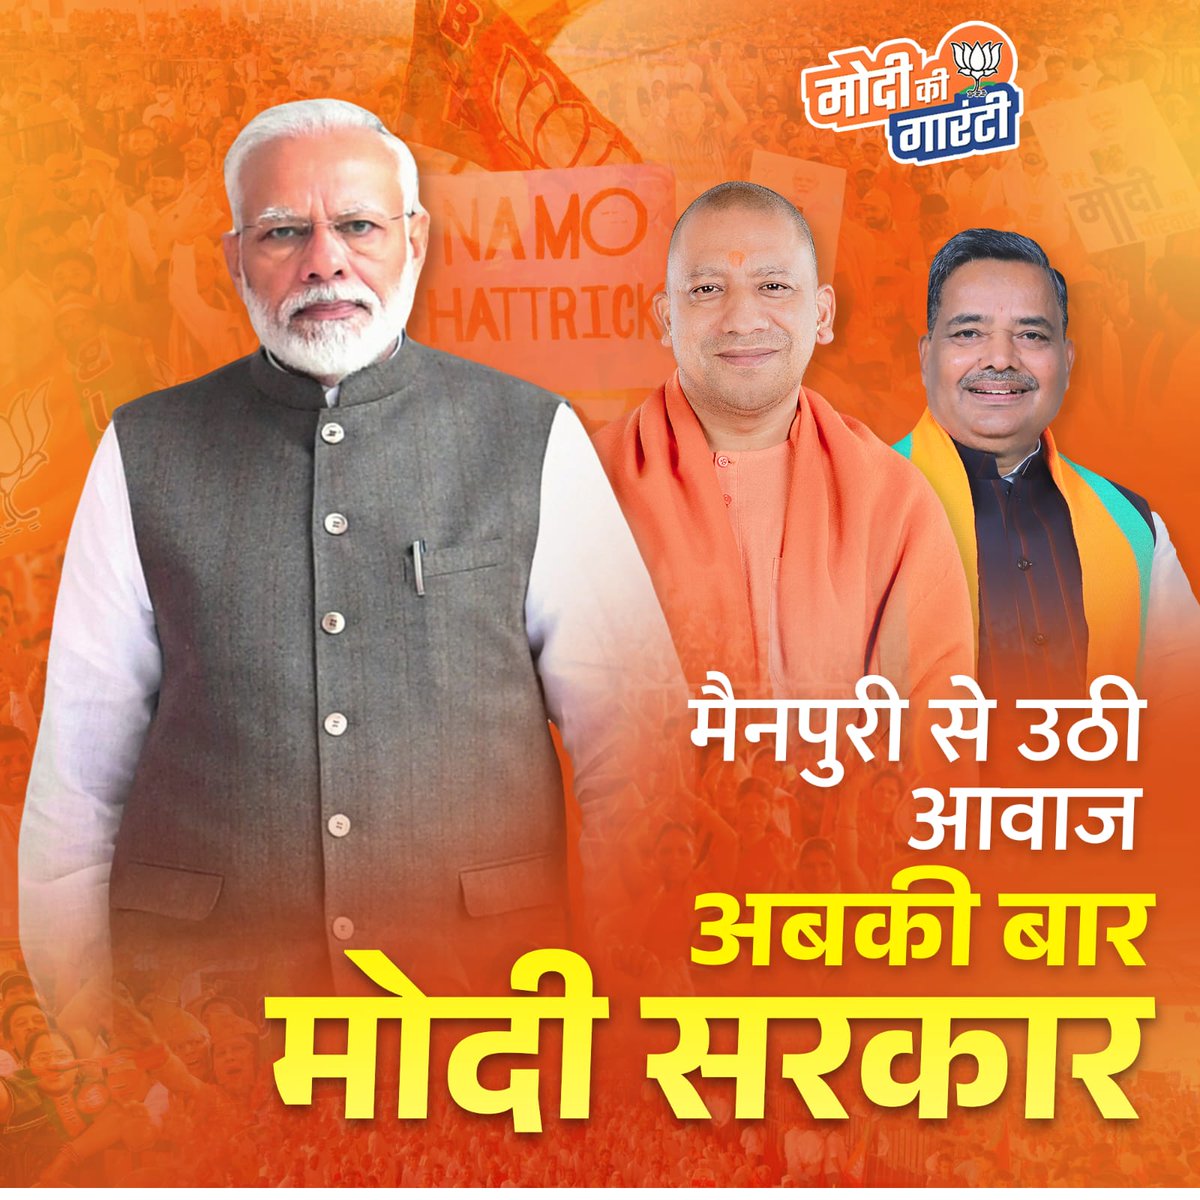 Mainpuri embraces change as BJP's leadership ignites a path toward progress. #मैनपुरी_में_भाजपा